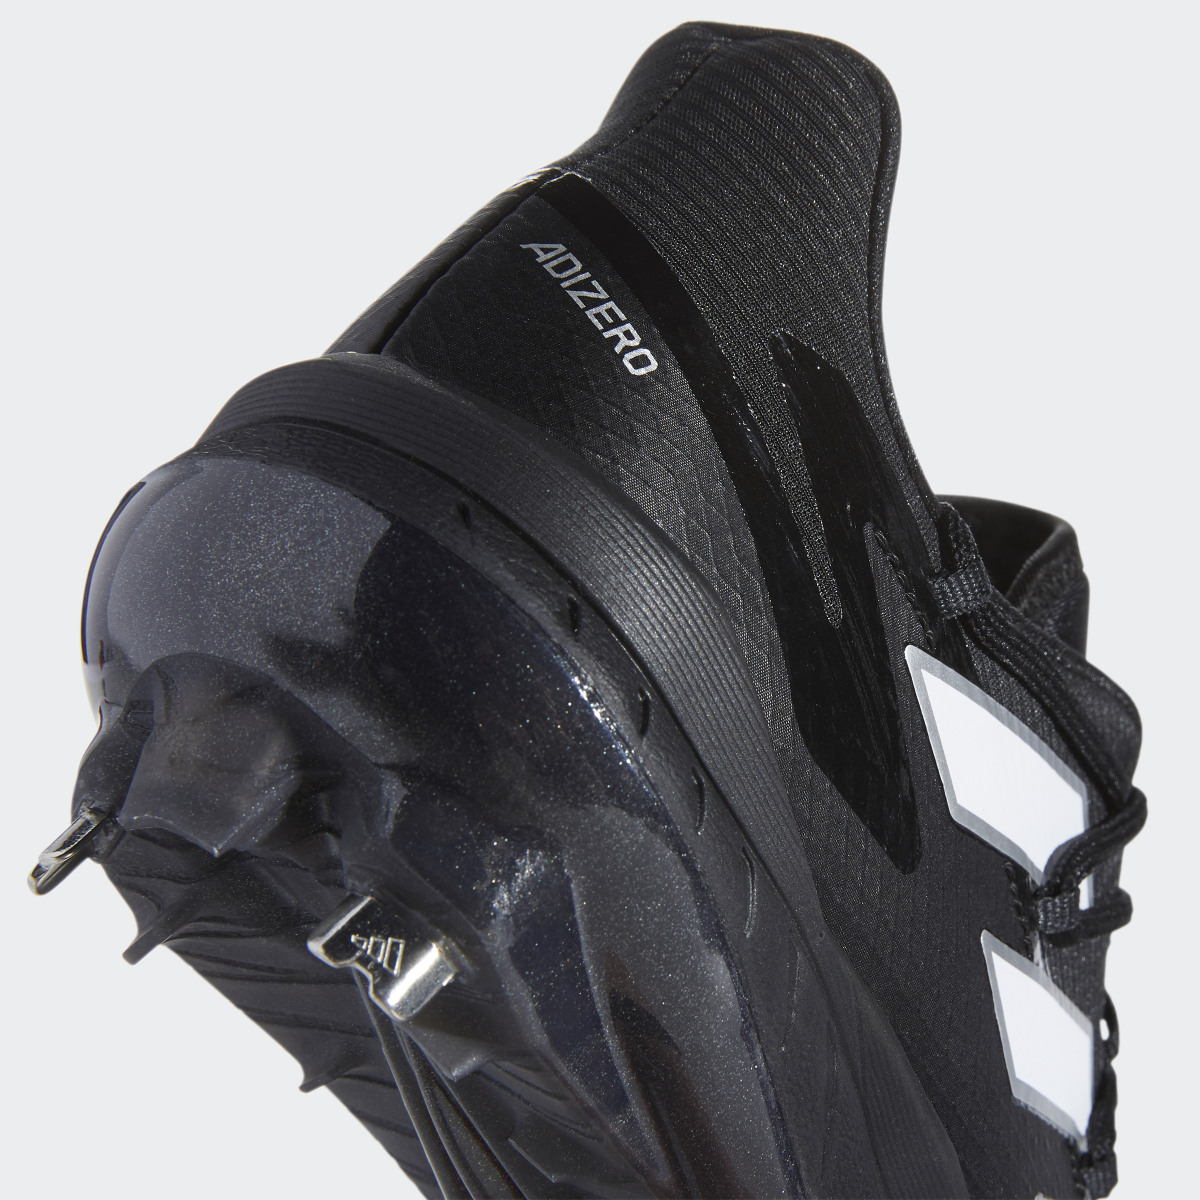 Adidas Adizero Afterburner 8 Cleats. 8